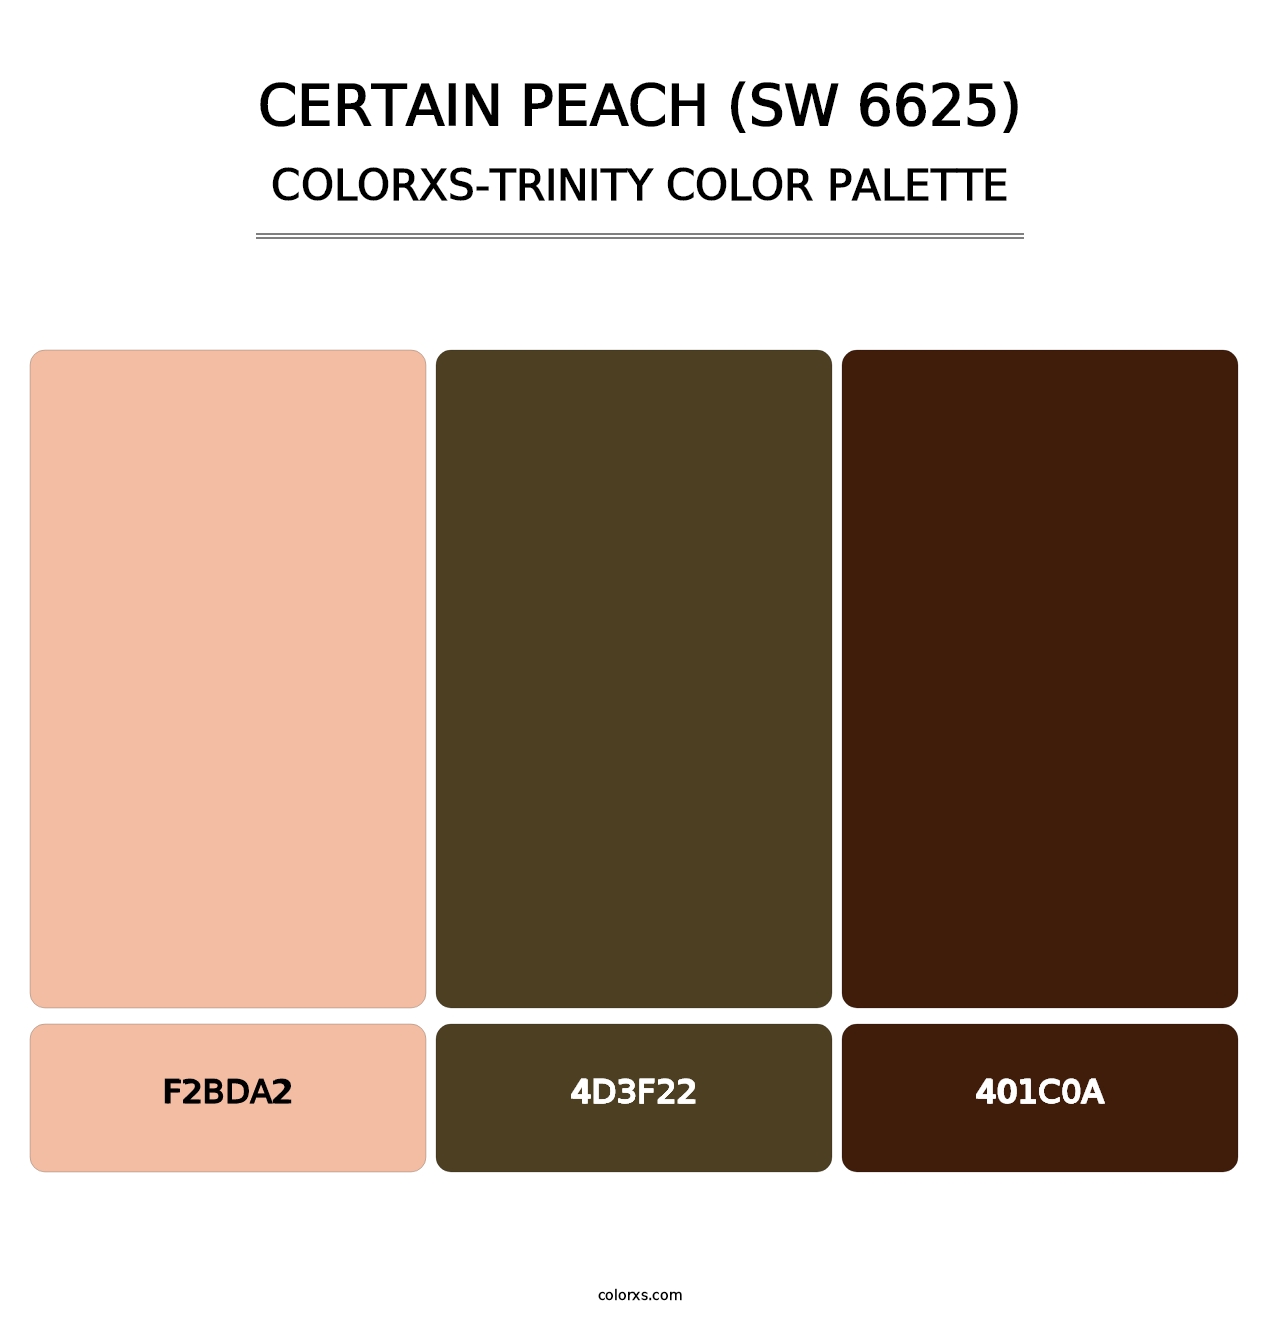 Certain Peach (SW 6625) - Colorxs Trinity Palette